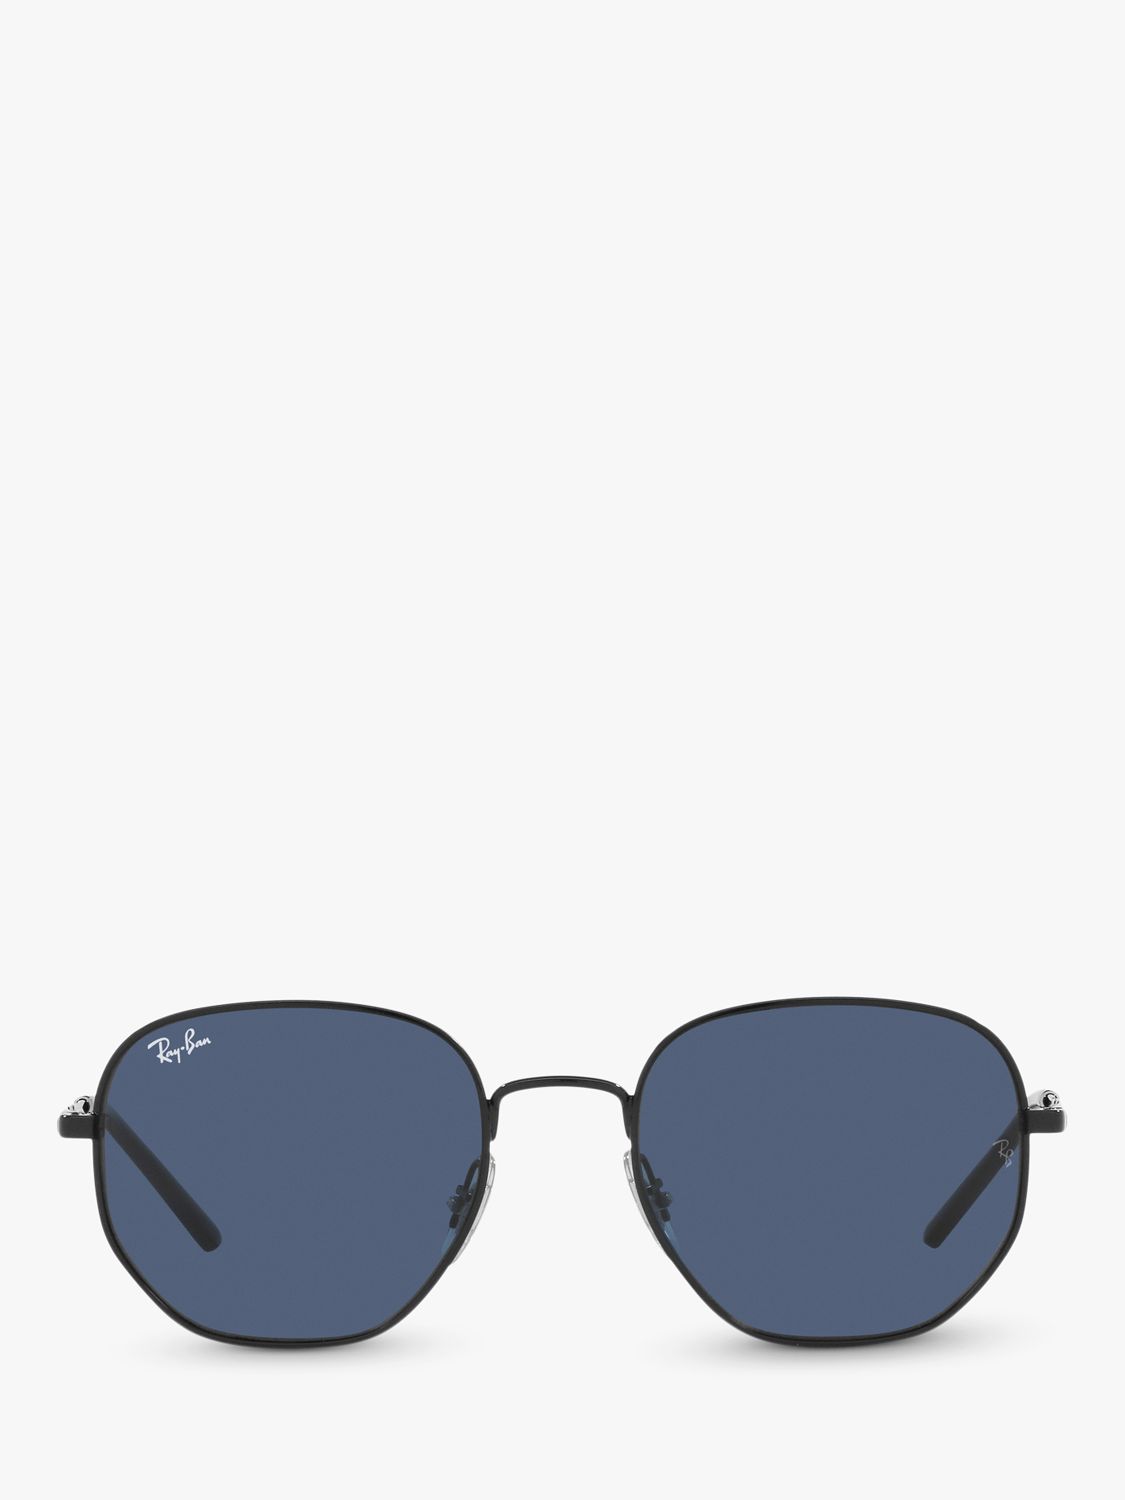 Buy Ray-Ban RB3682 Unisex Irregular Sunglasses, Black/Blue Online at johnlewis.com